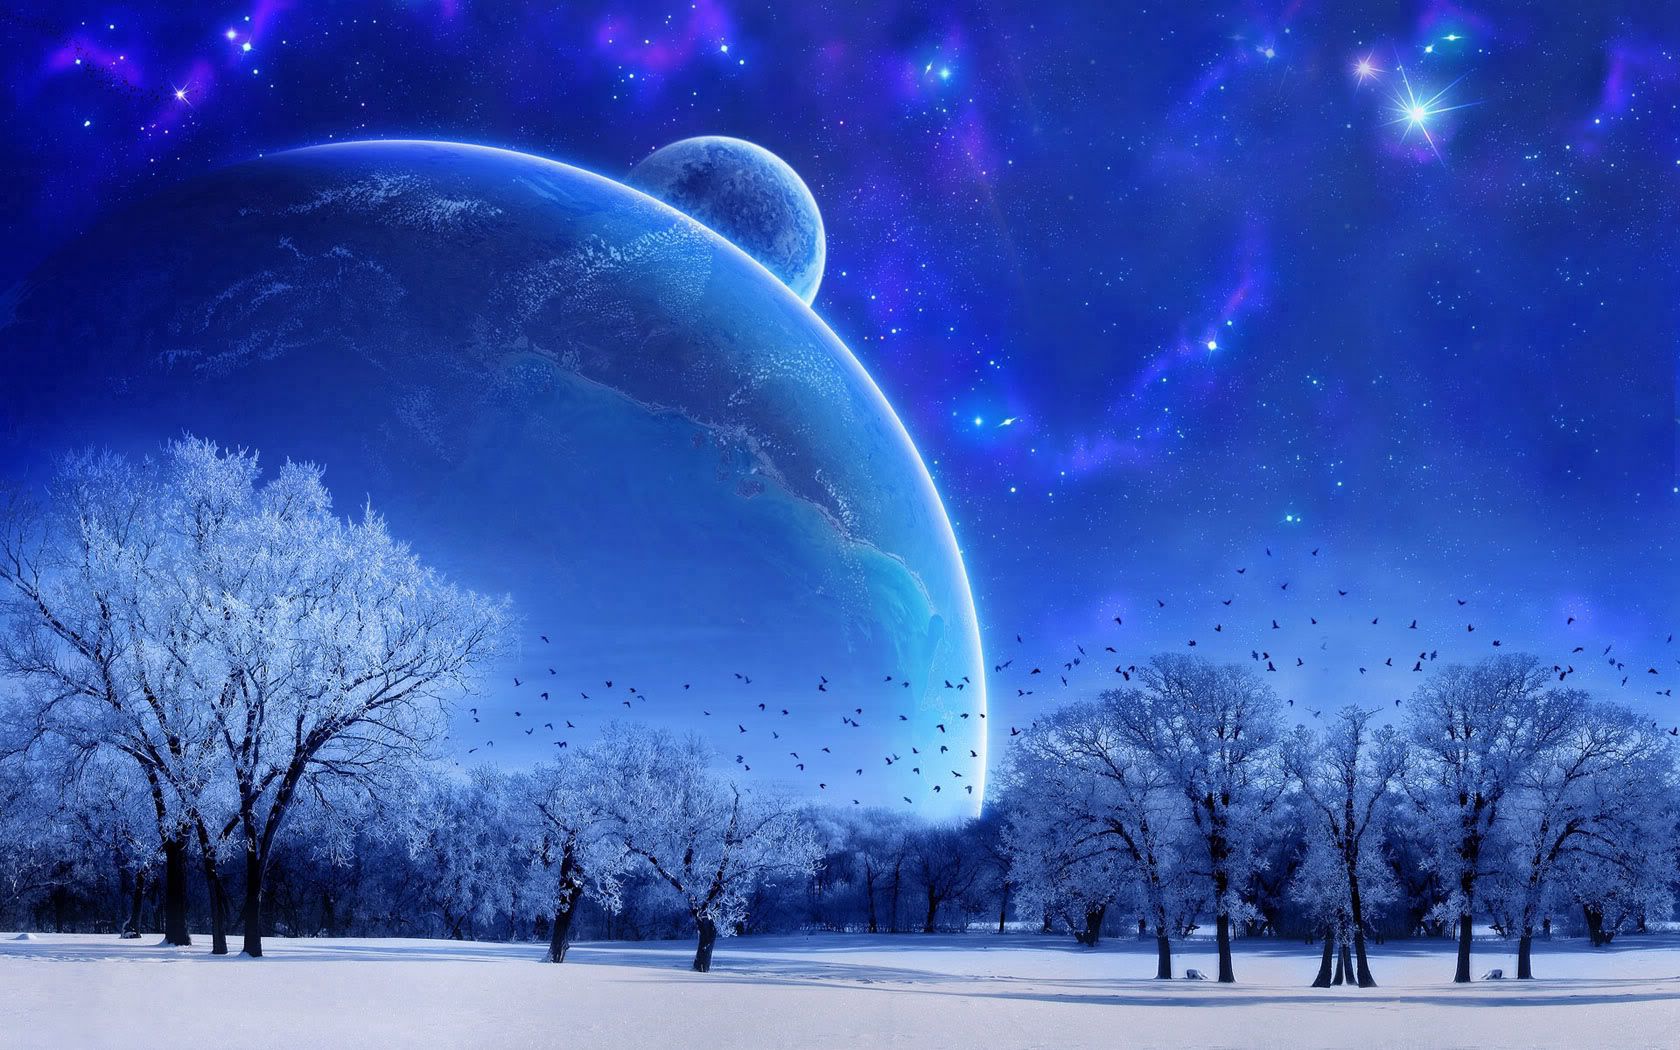 sky, landscape, nature, abstract, full moon, snow, winter, birds, trees, evening